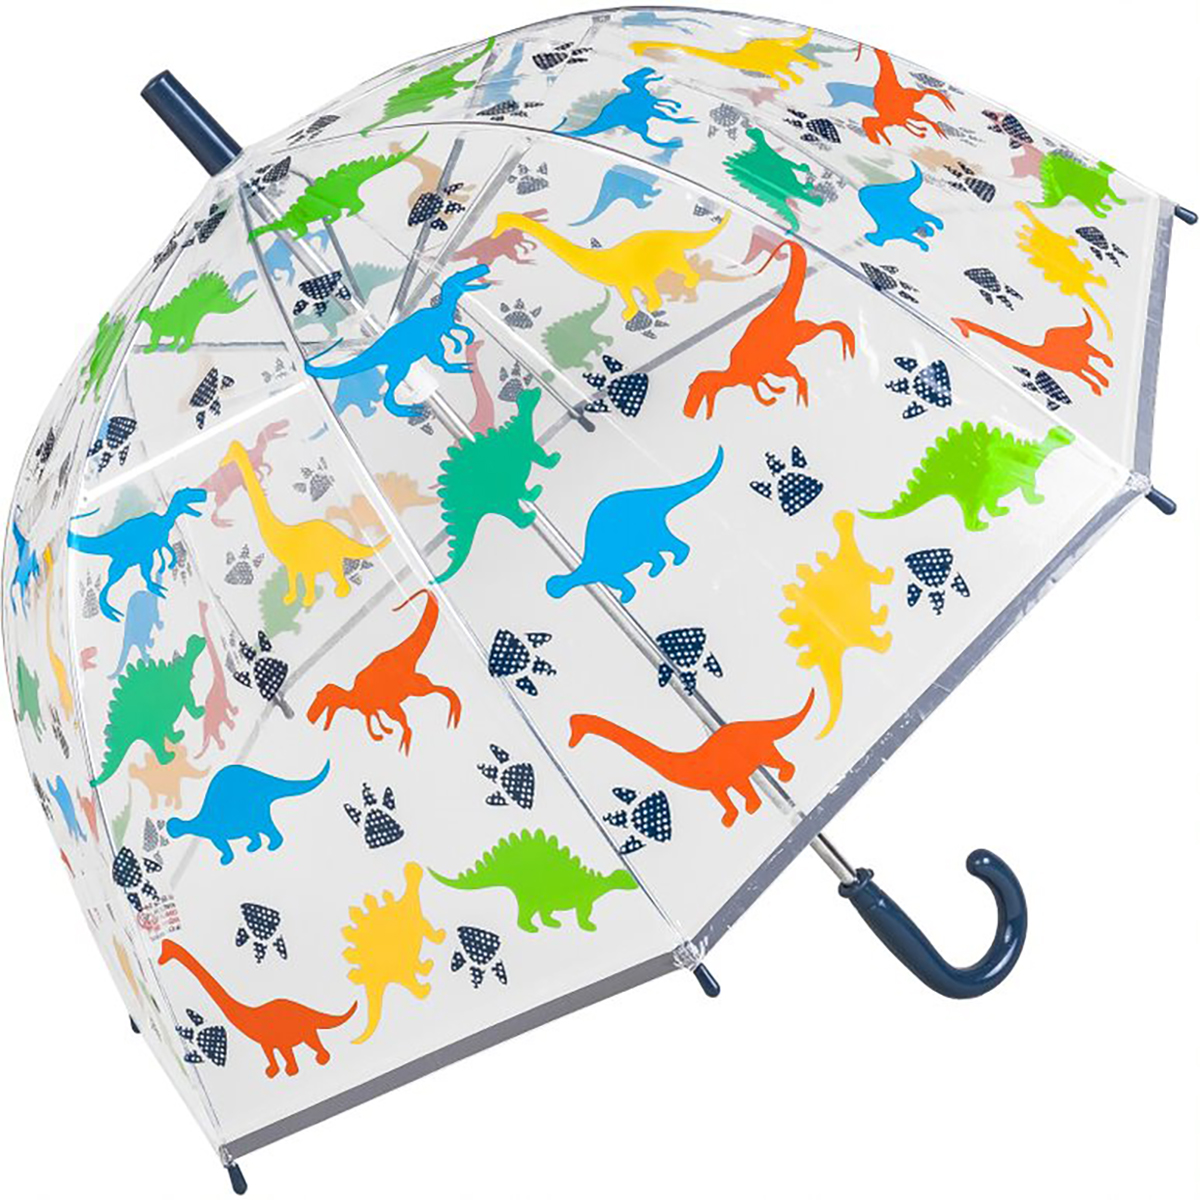 Susino Children's See-Through Dome Umbrella - Dinosaurs